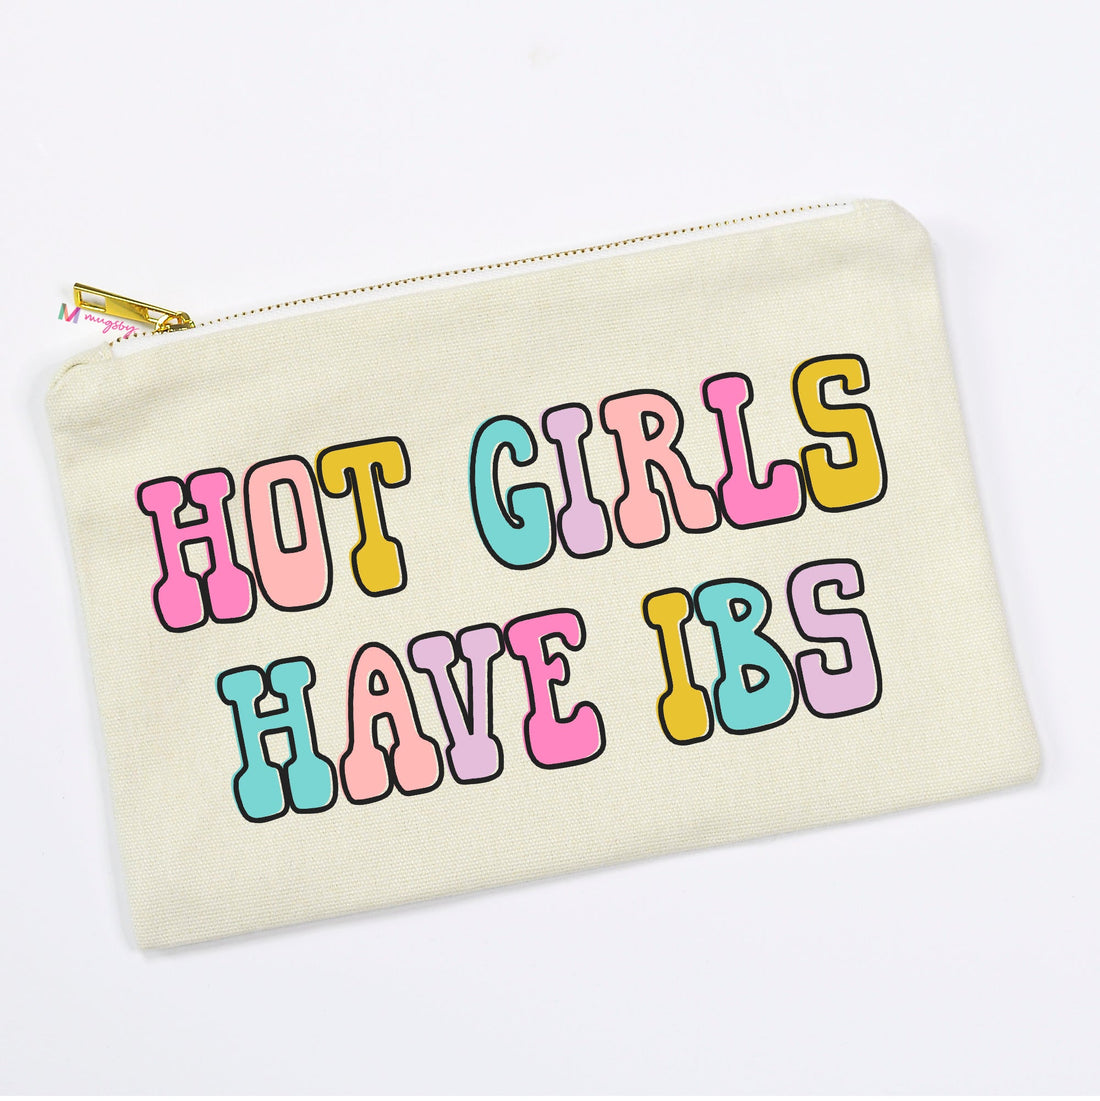 Hot Girls Have IBS Makeup Bag